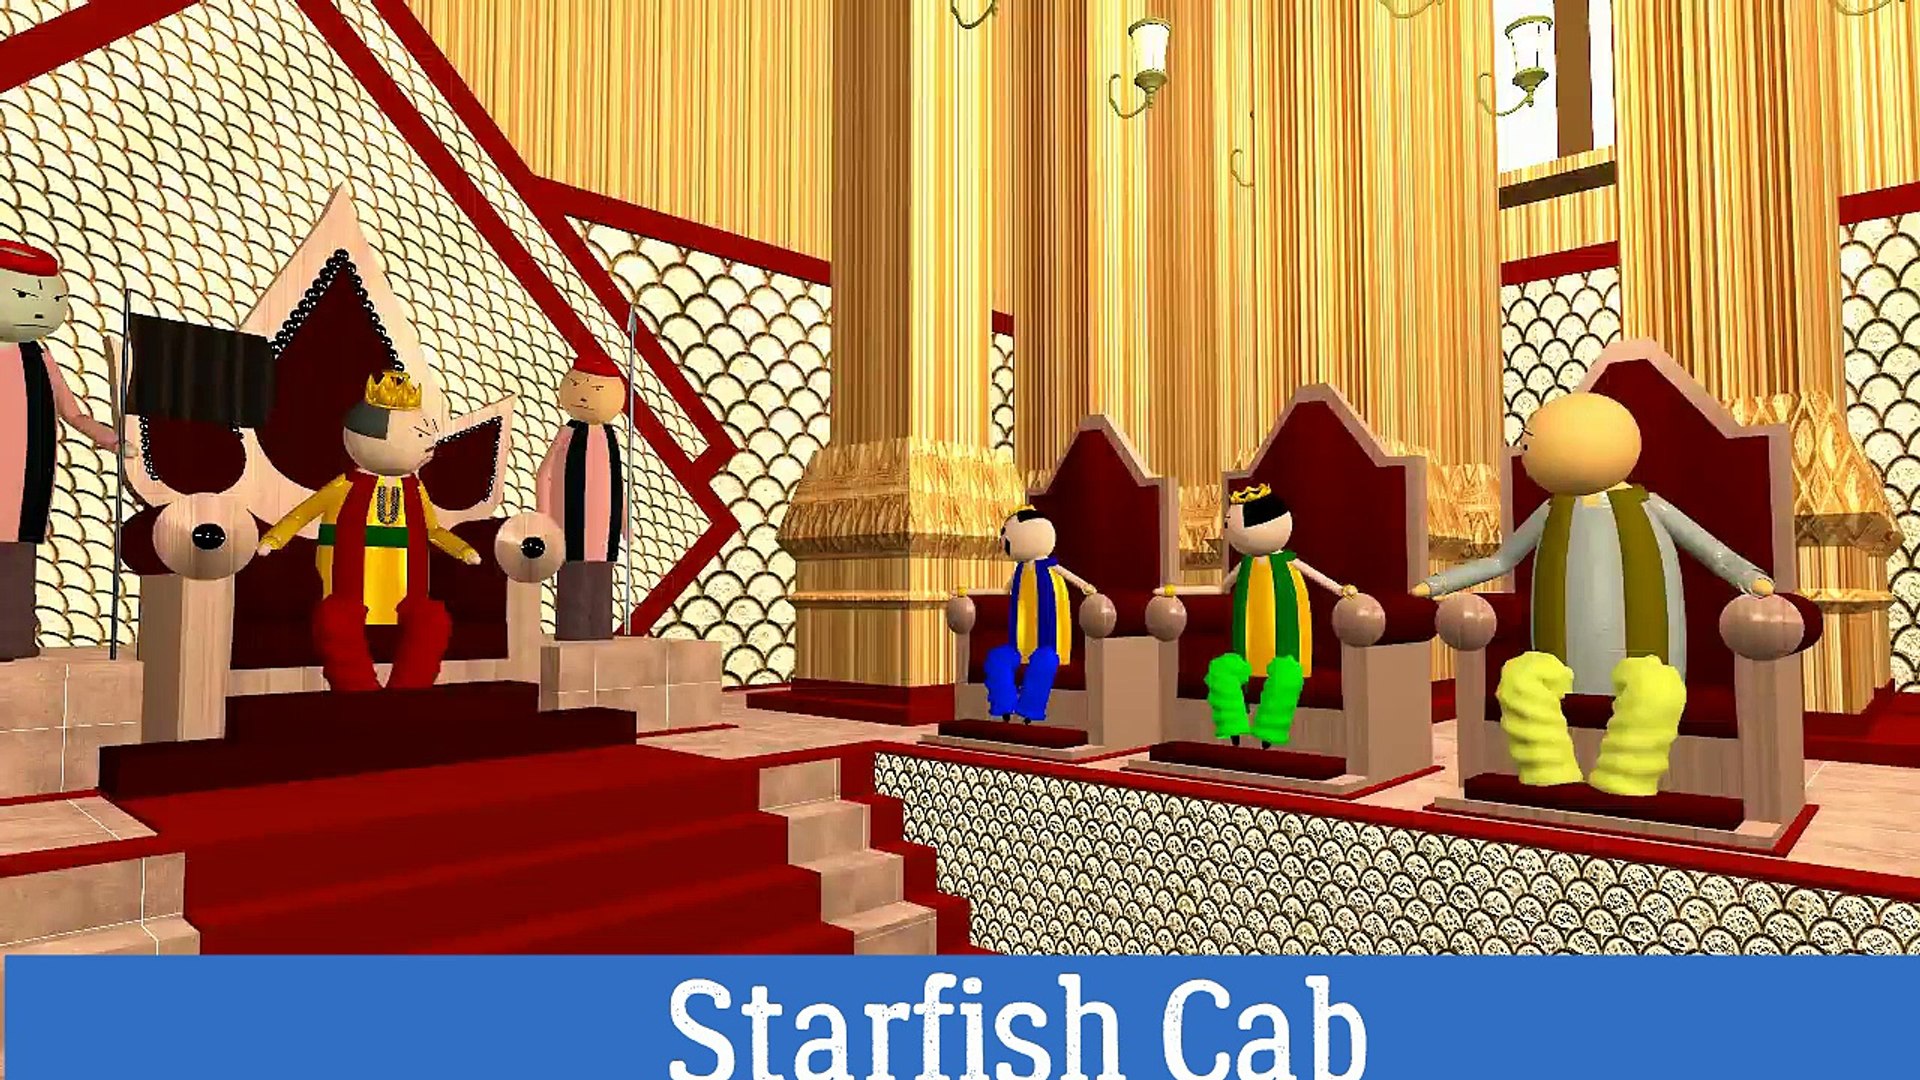 Make Joke of - Raj Vaidya - Funny Animated Kanpur Cartoon Video Masti By Starfish Cab